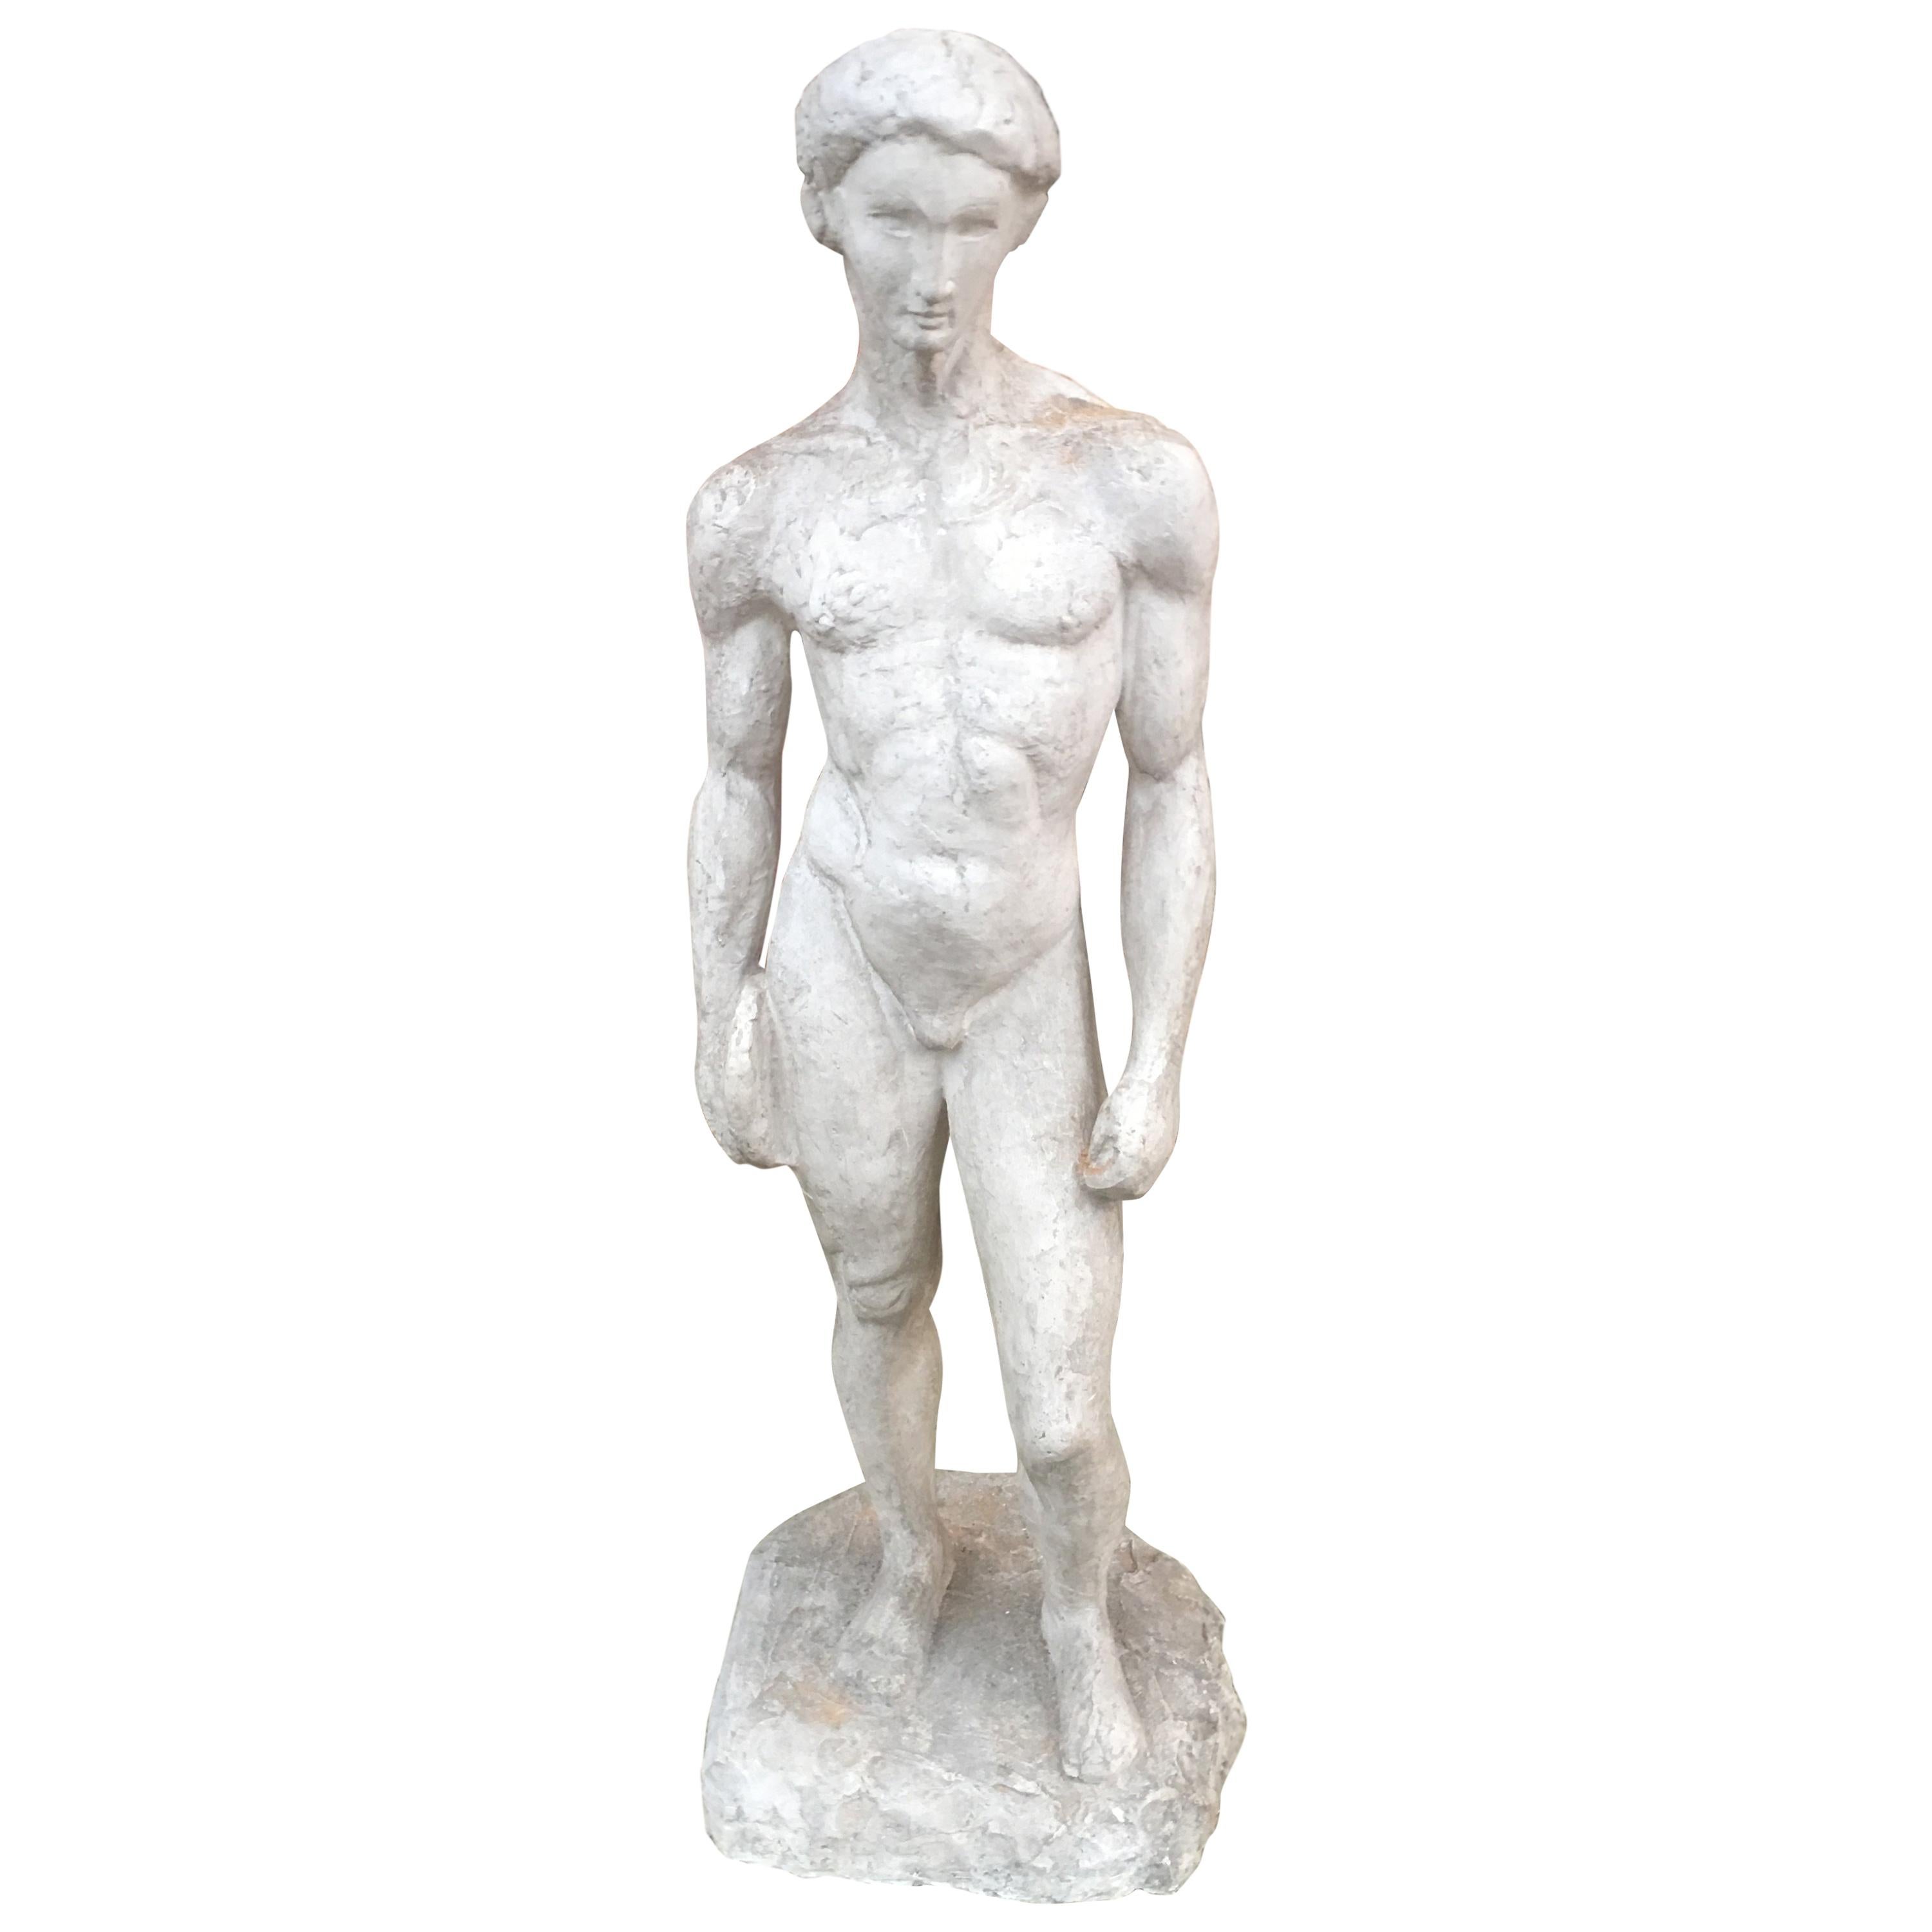 Ernestine Sirine-Real "Romantique Art Deco Plaster Sculpture of a Man